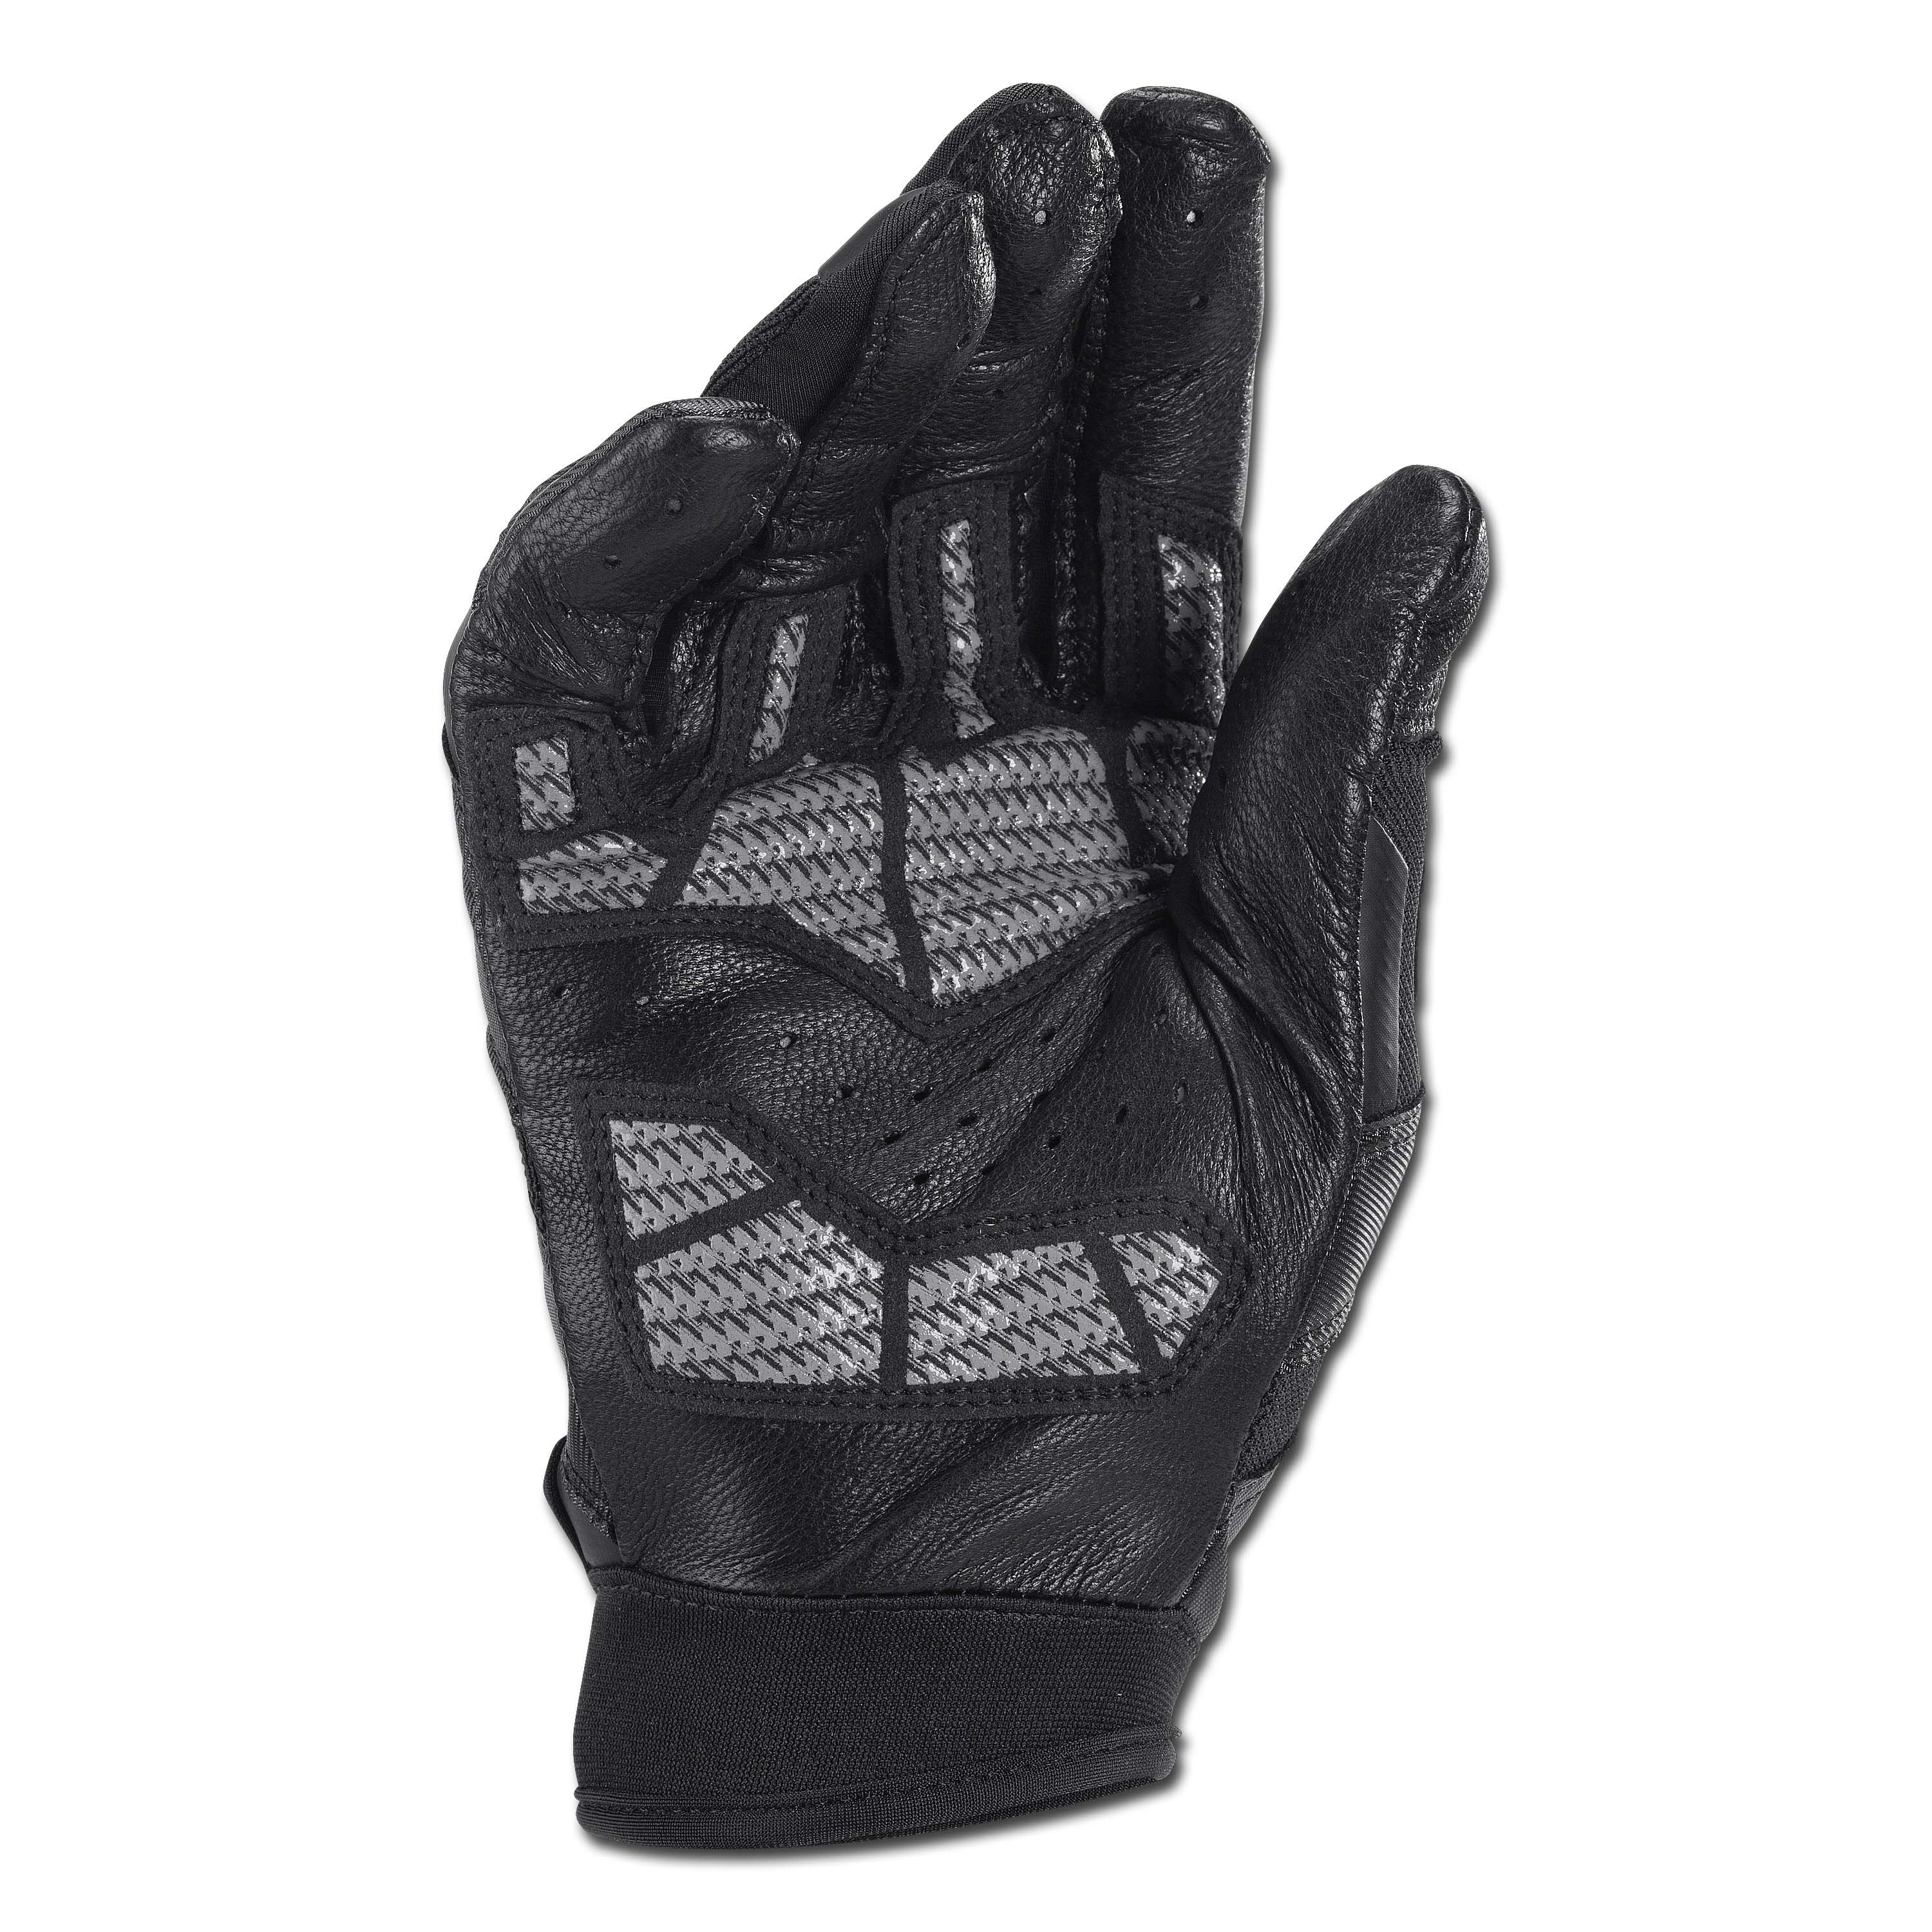 Under Armour Renegade Glove black | Under Armour Renegade Glove black | Gloves | Gloves | Clothing